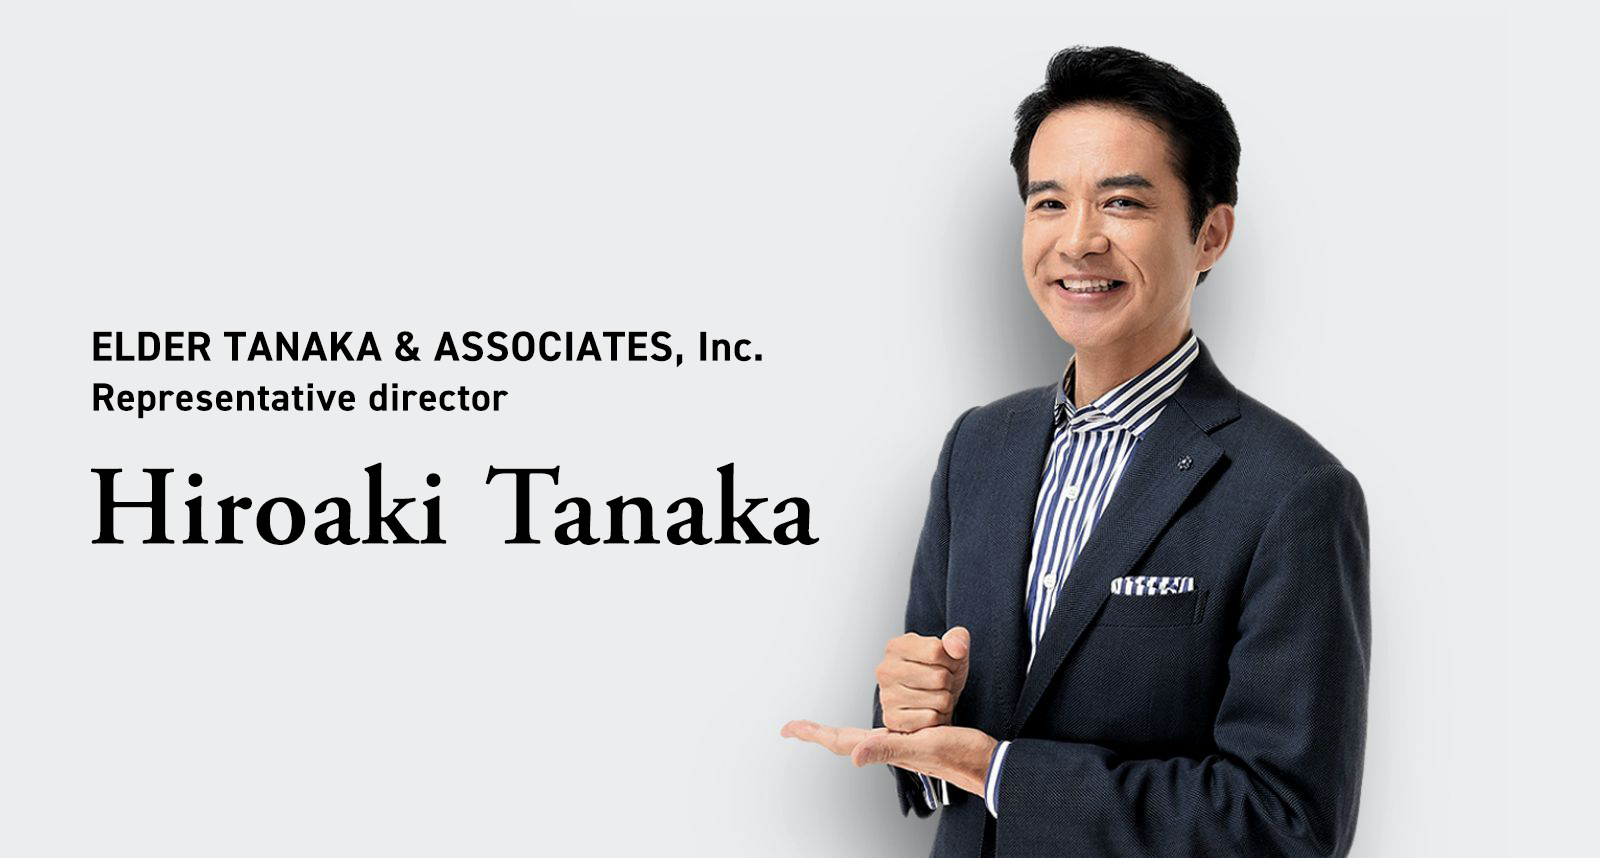 ELDER TANAKA & ASSOCIATES, INC. Representative drector Hiroaki Tanaka